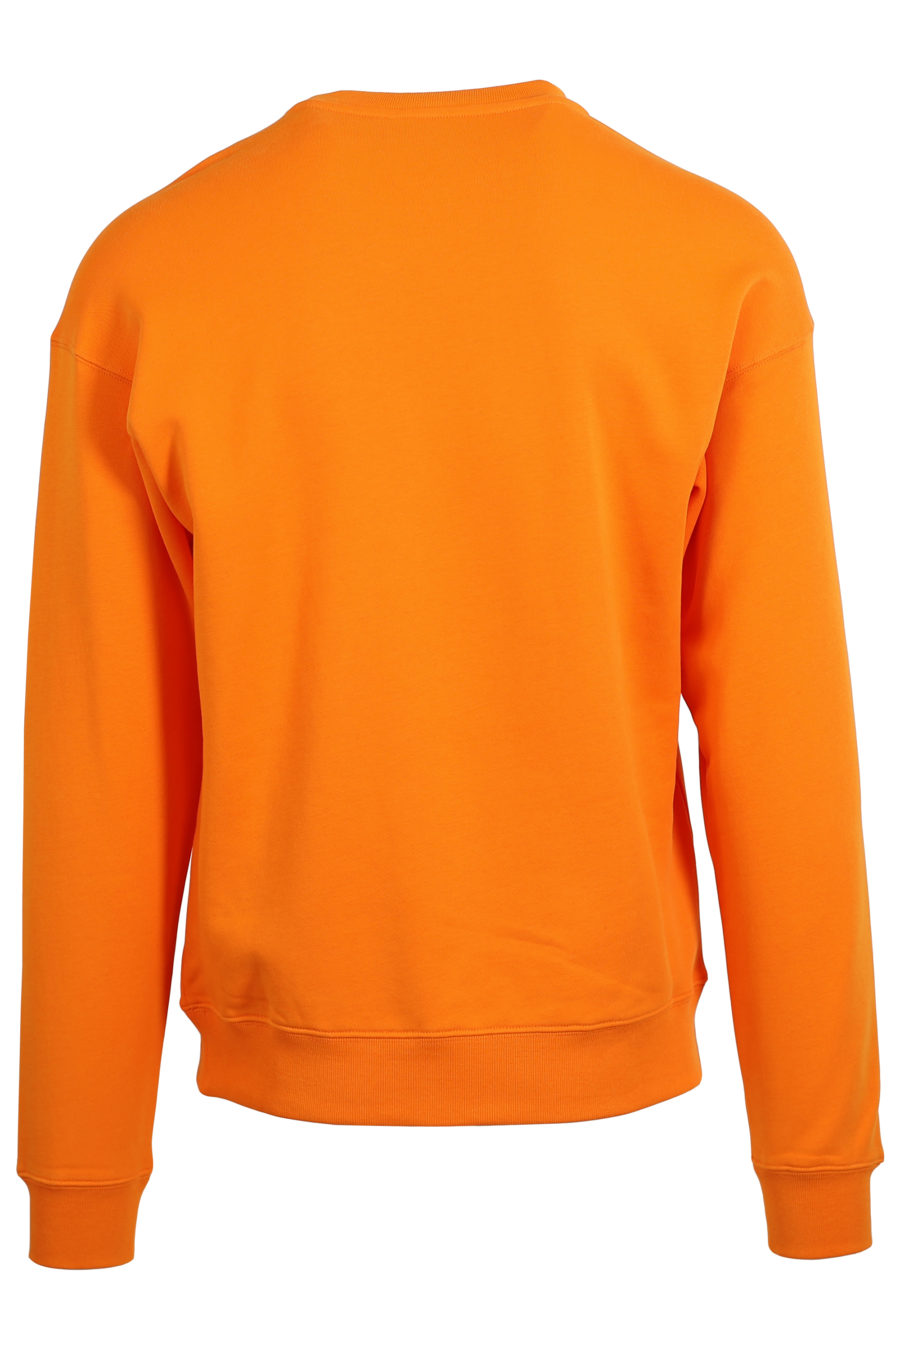 Sweatshirt orange großes Logo vorne - IMG 0996